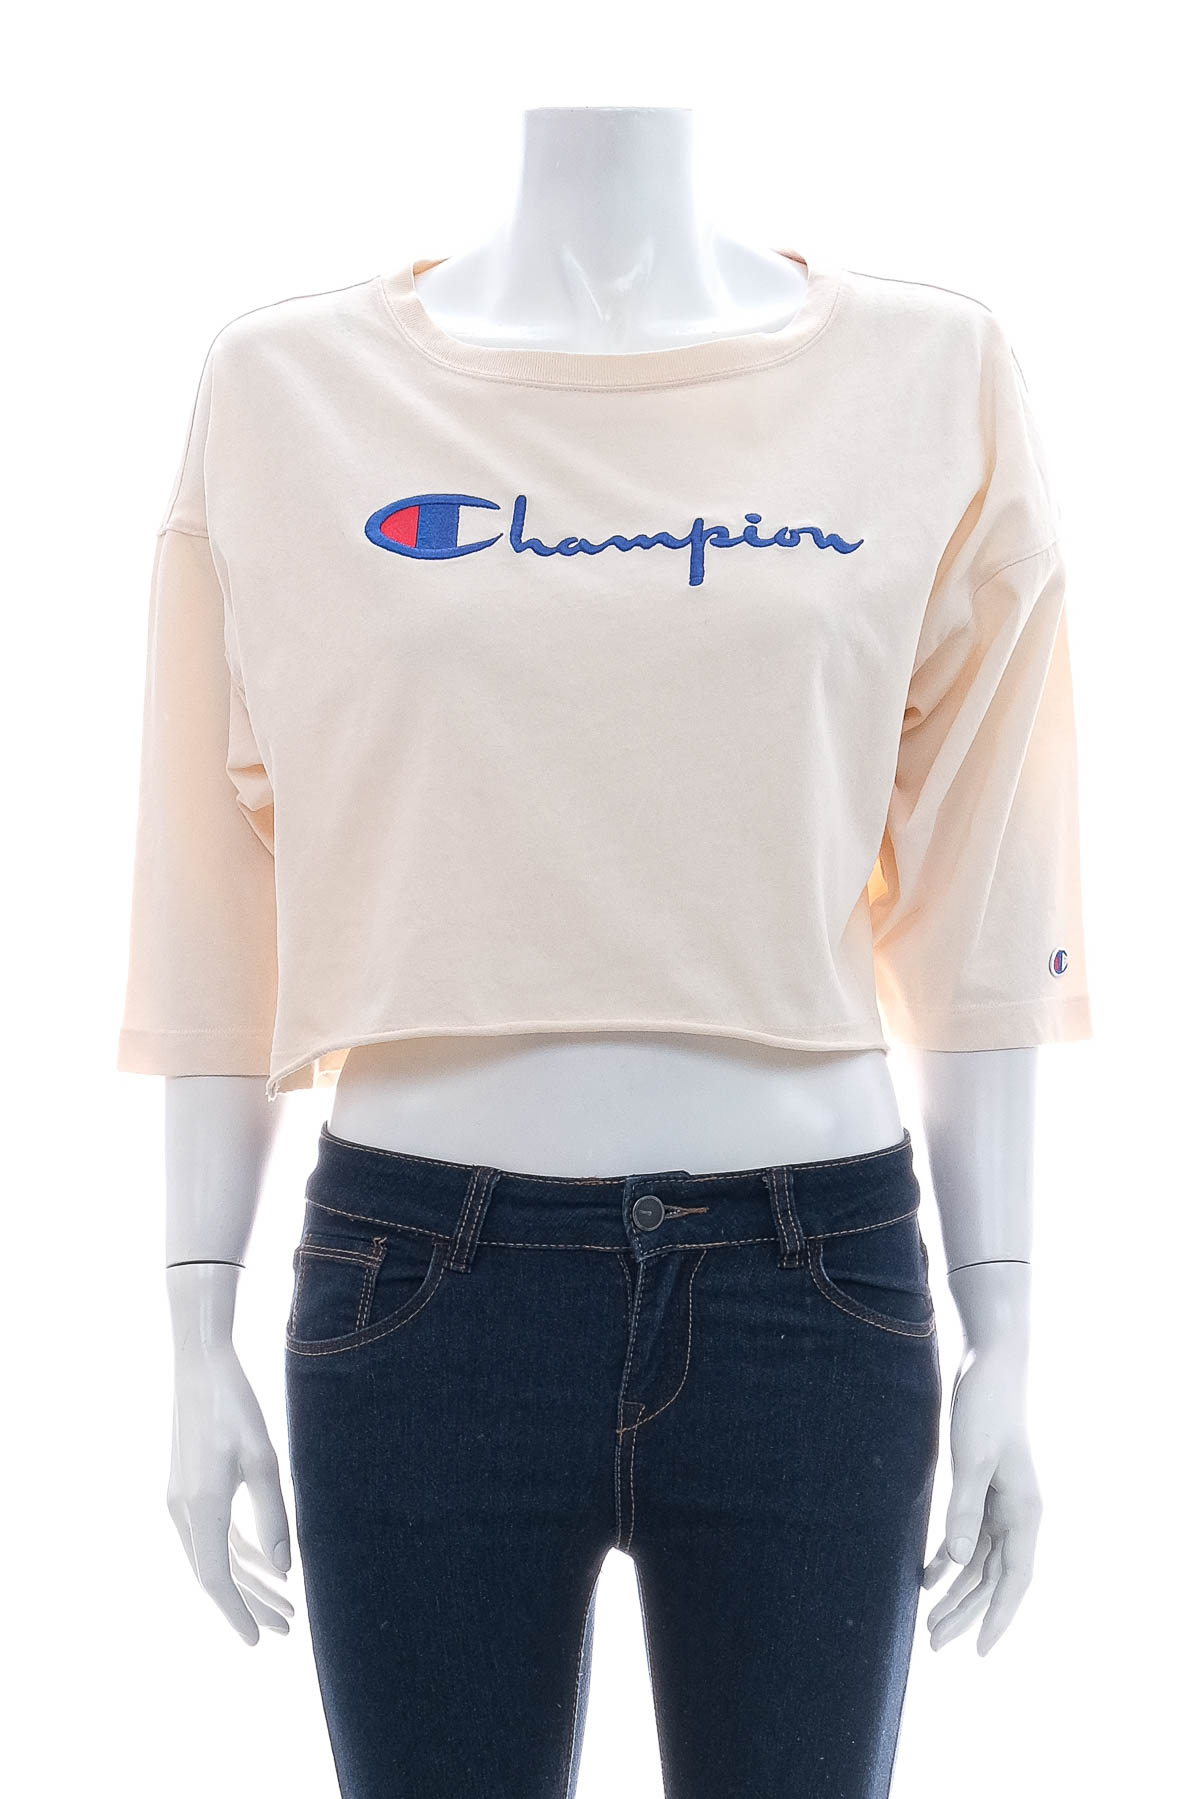 Women's blouse - Champion - 0